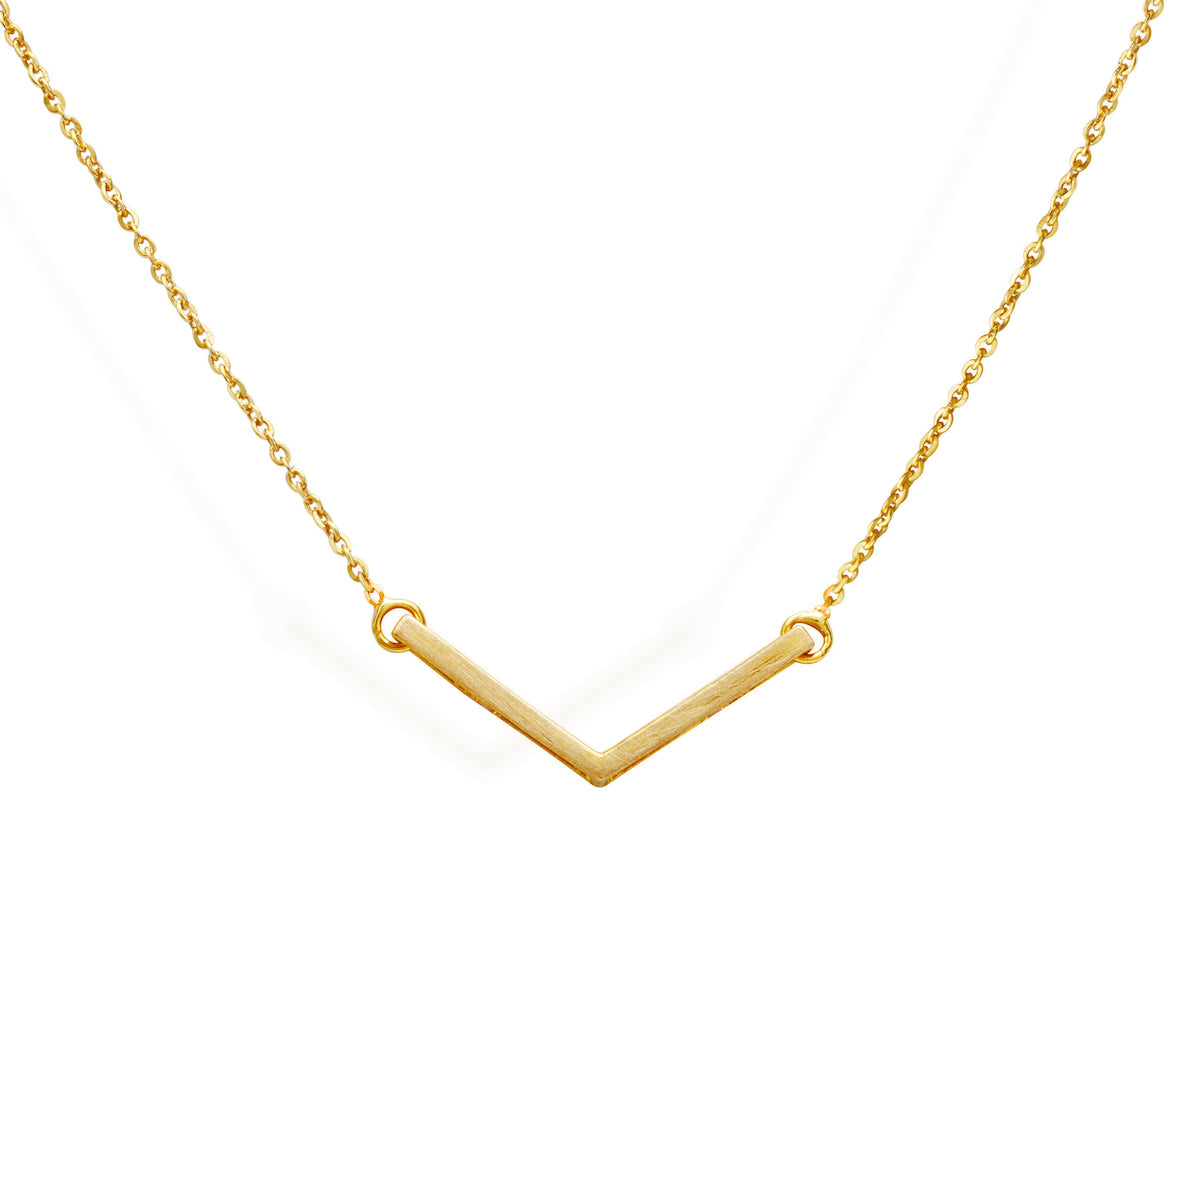 Beautiful two layered gold chain | PC Chandra Jewellers